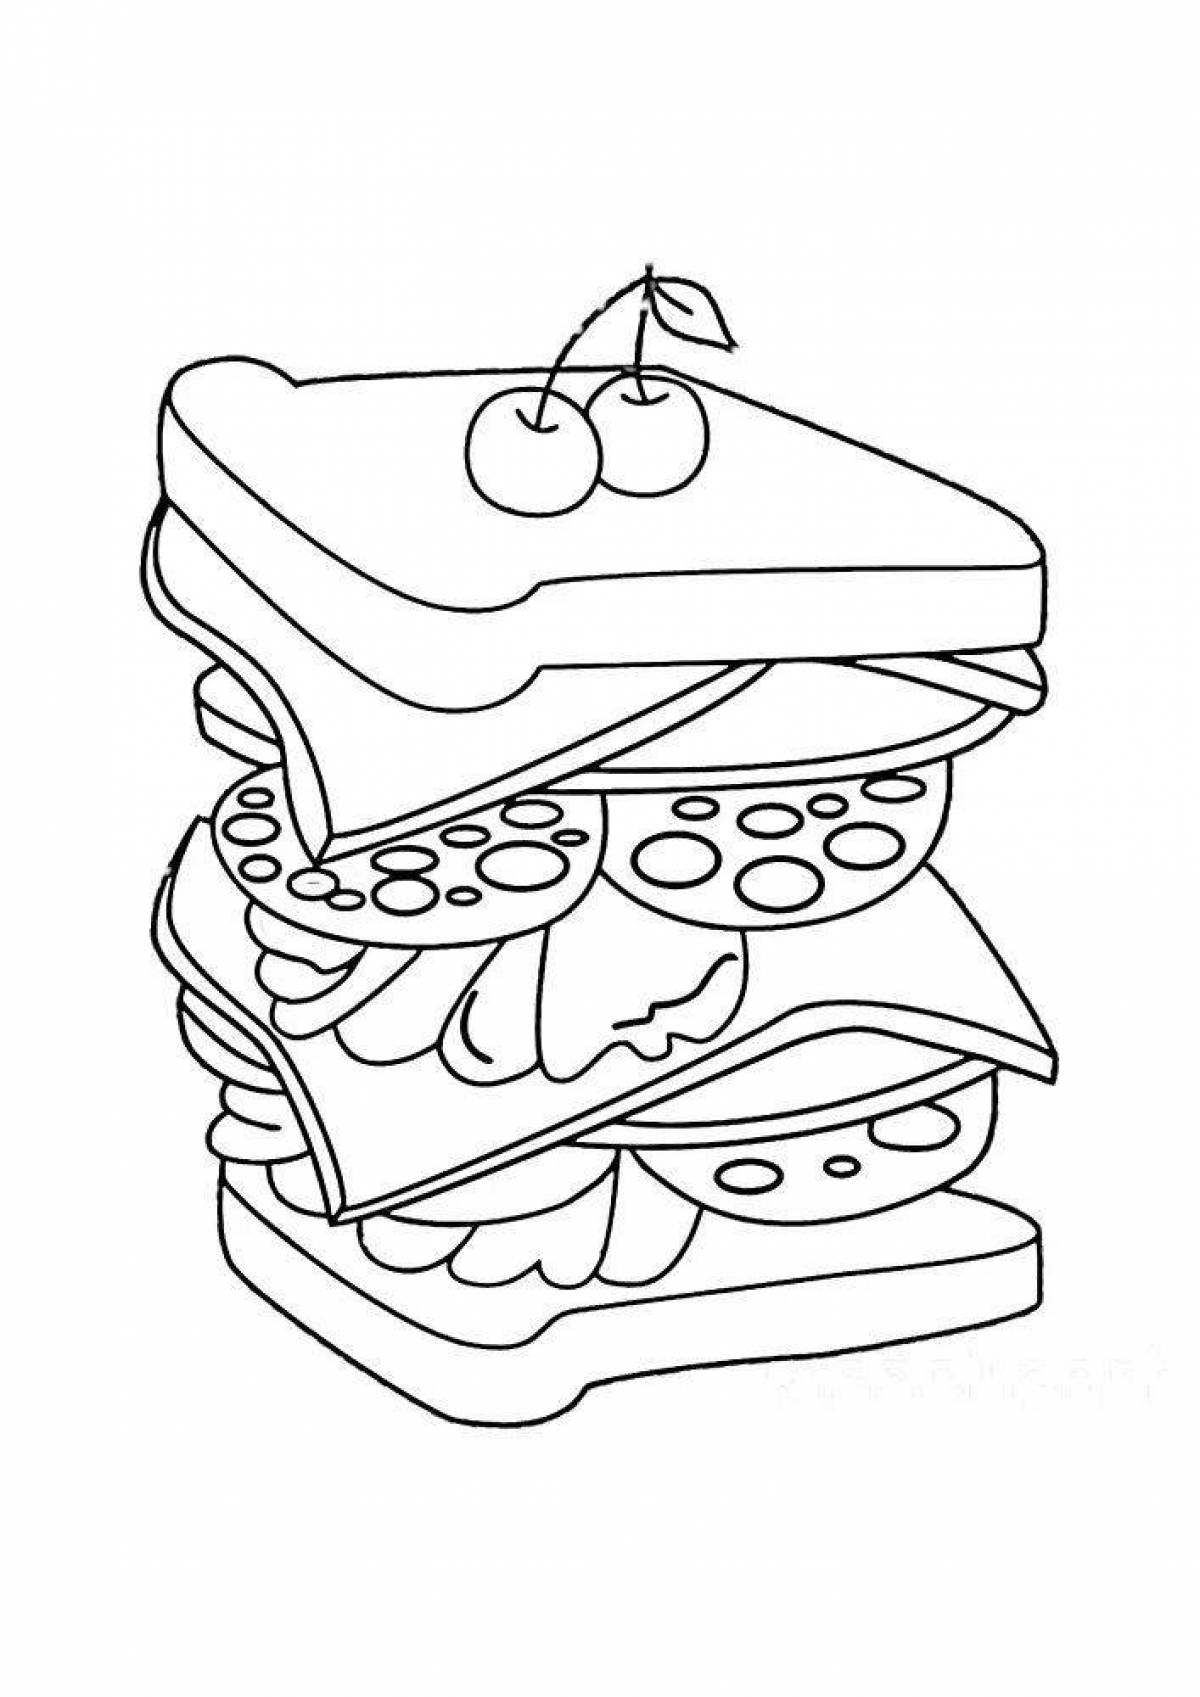 Раскраска сытный сэндвич